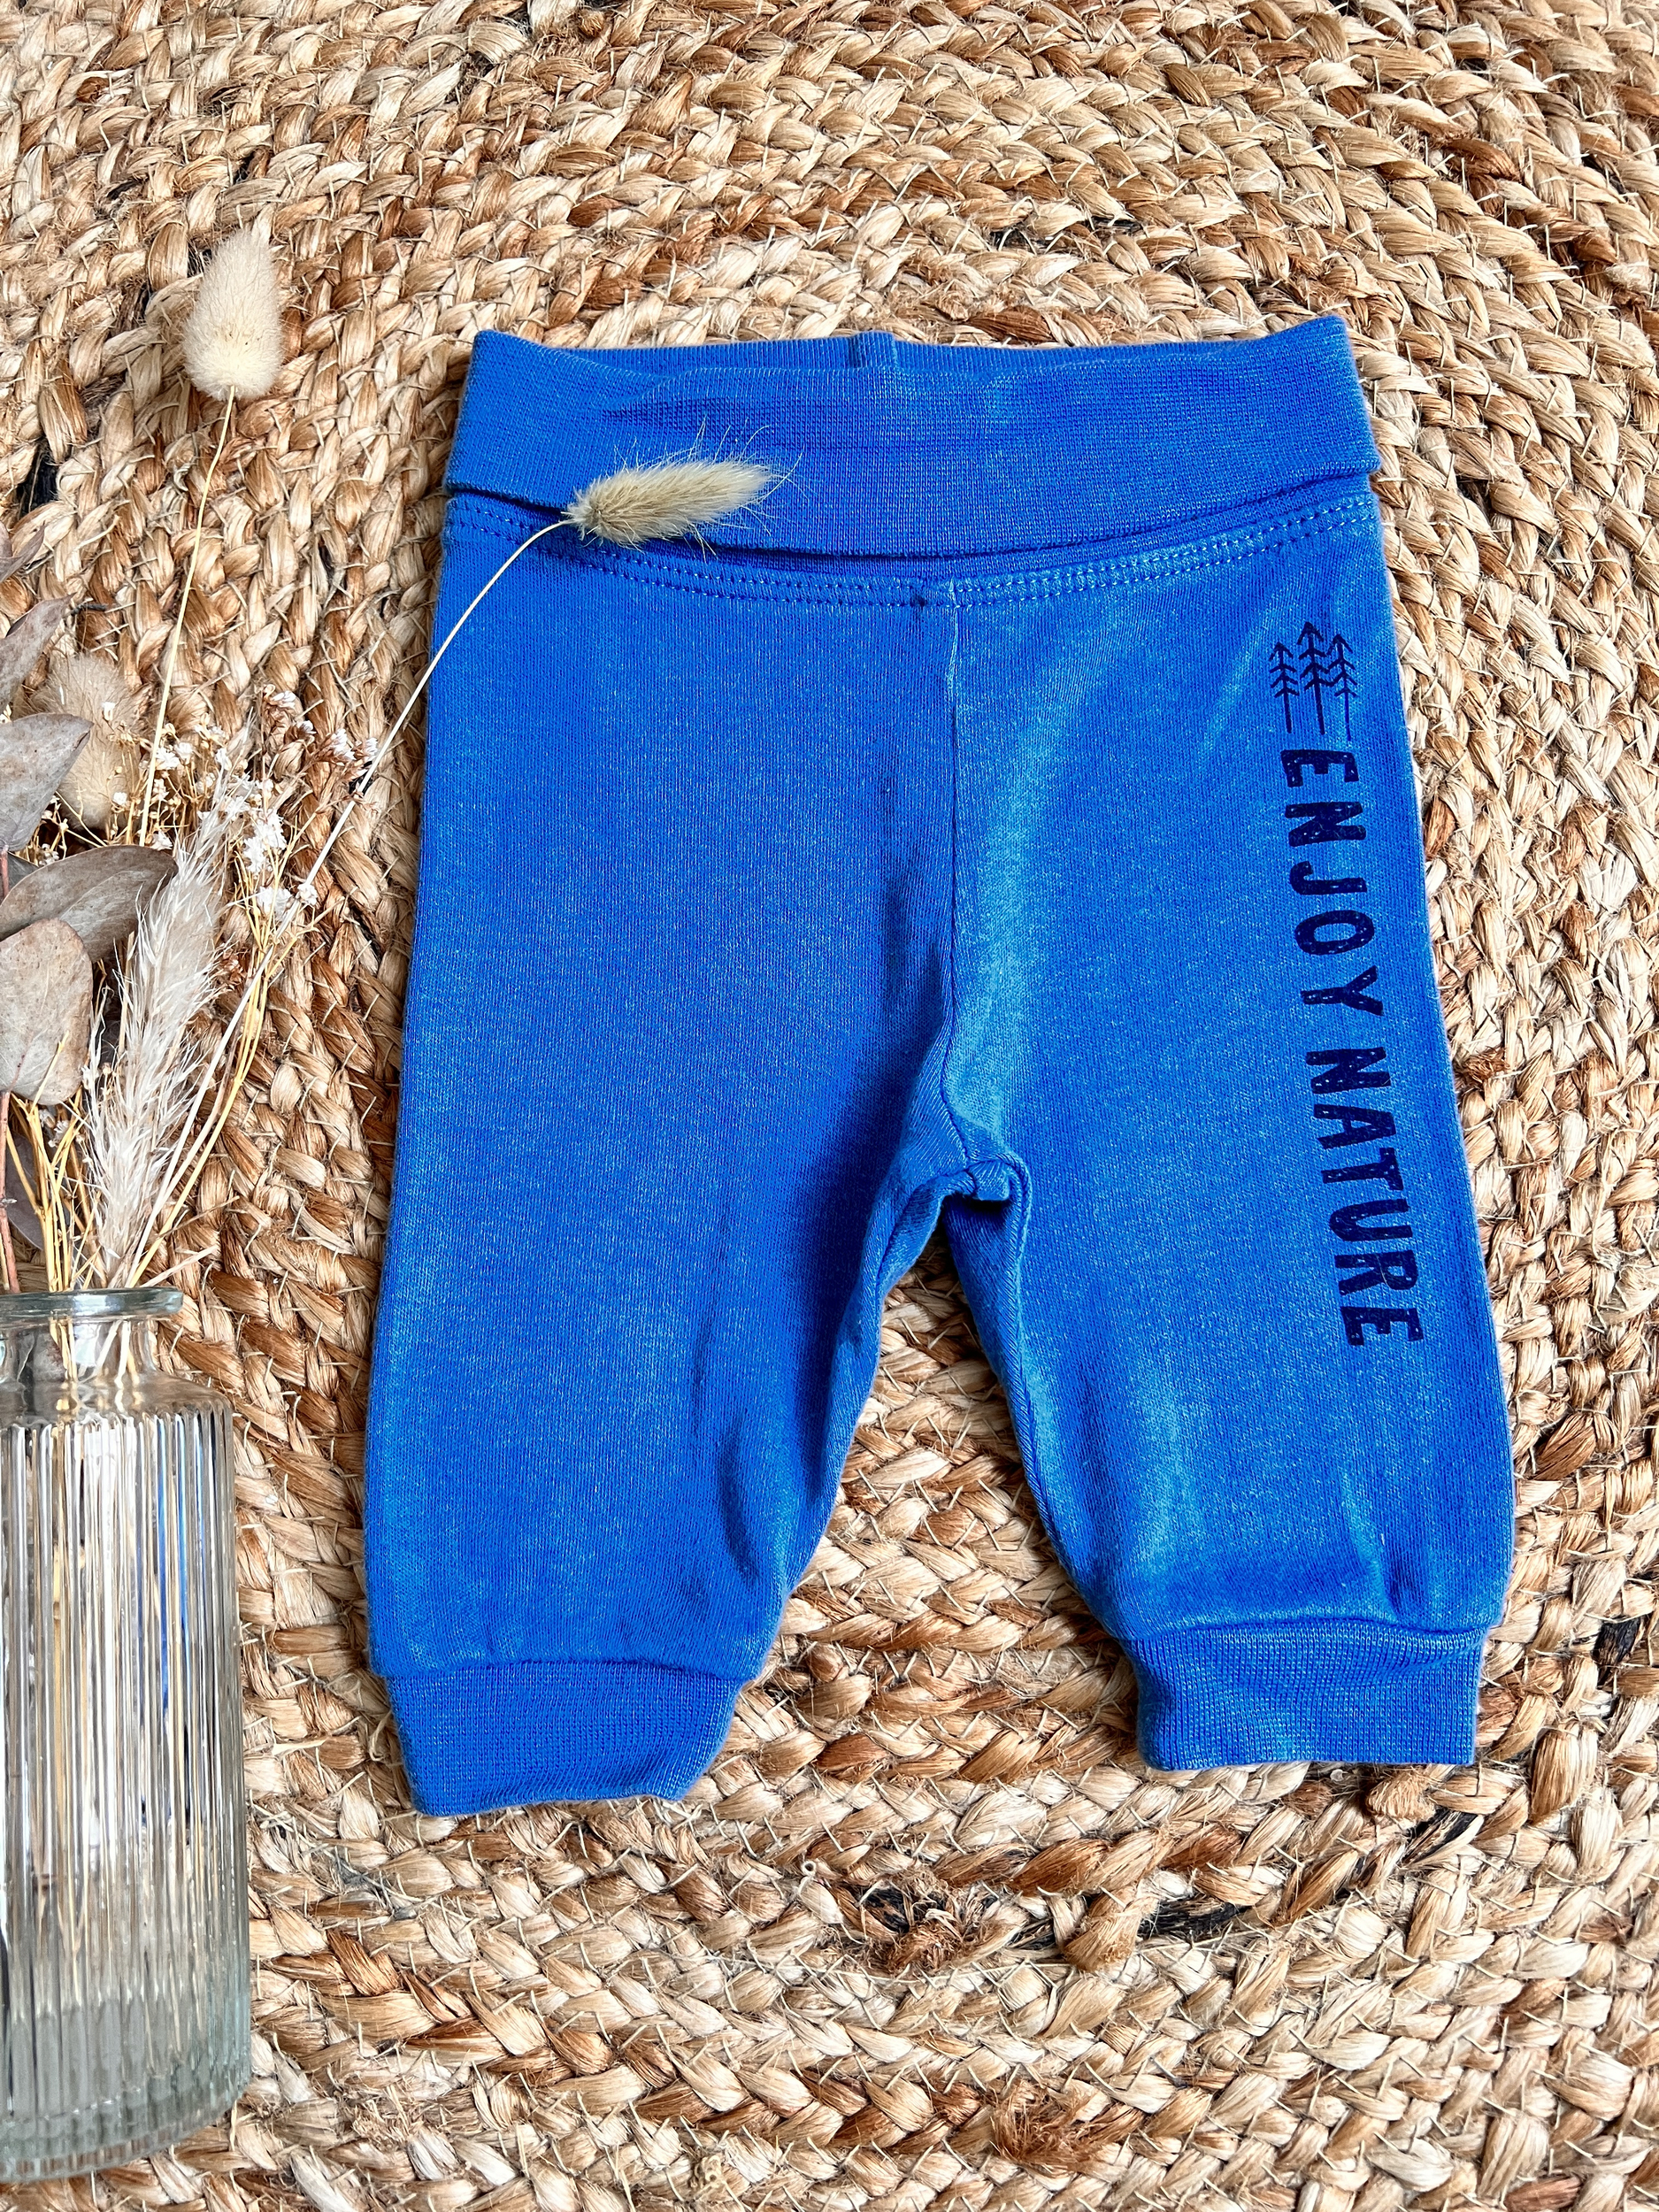 Pantalon jogging - - Lupilu - Ope Occasions pour - enfants mois 0/2 Garçon/Pantalons bleu 